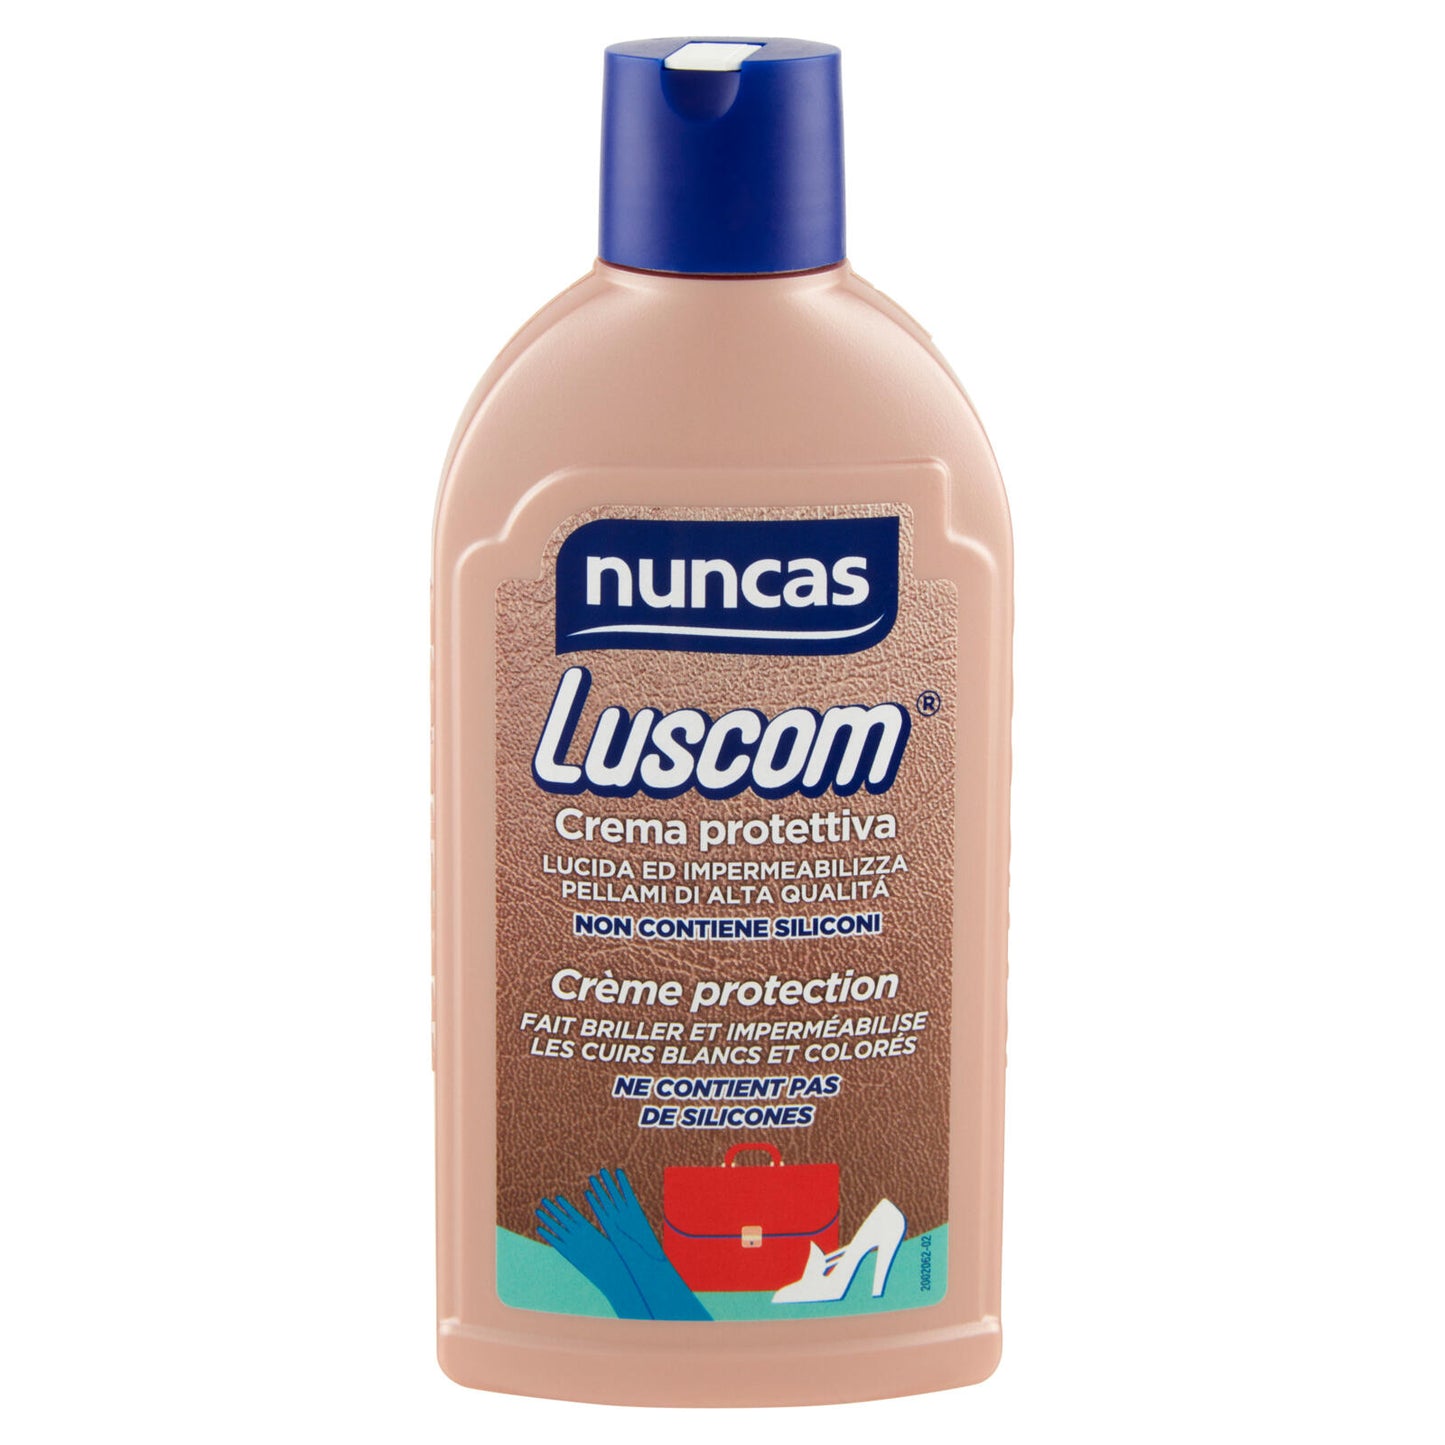 nuncas Luscom Crema protettiva 200 ml